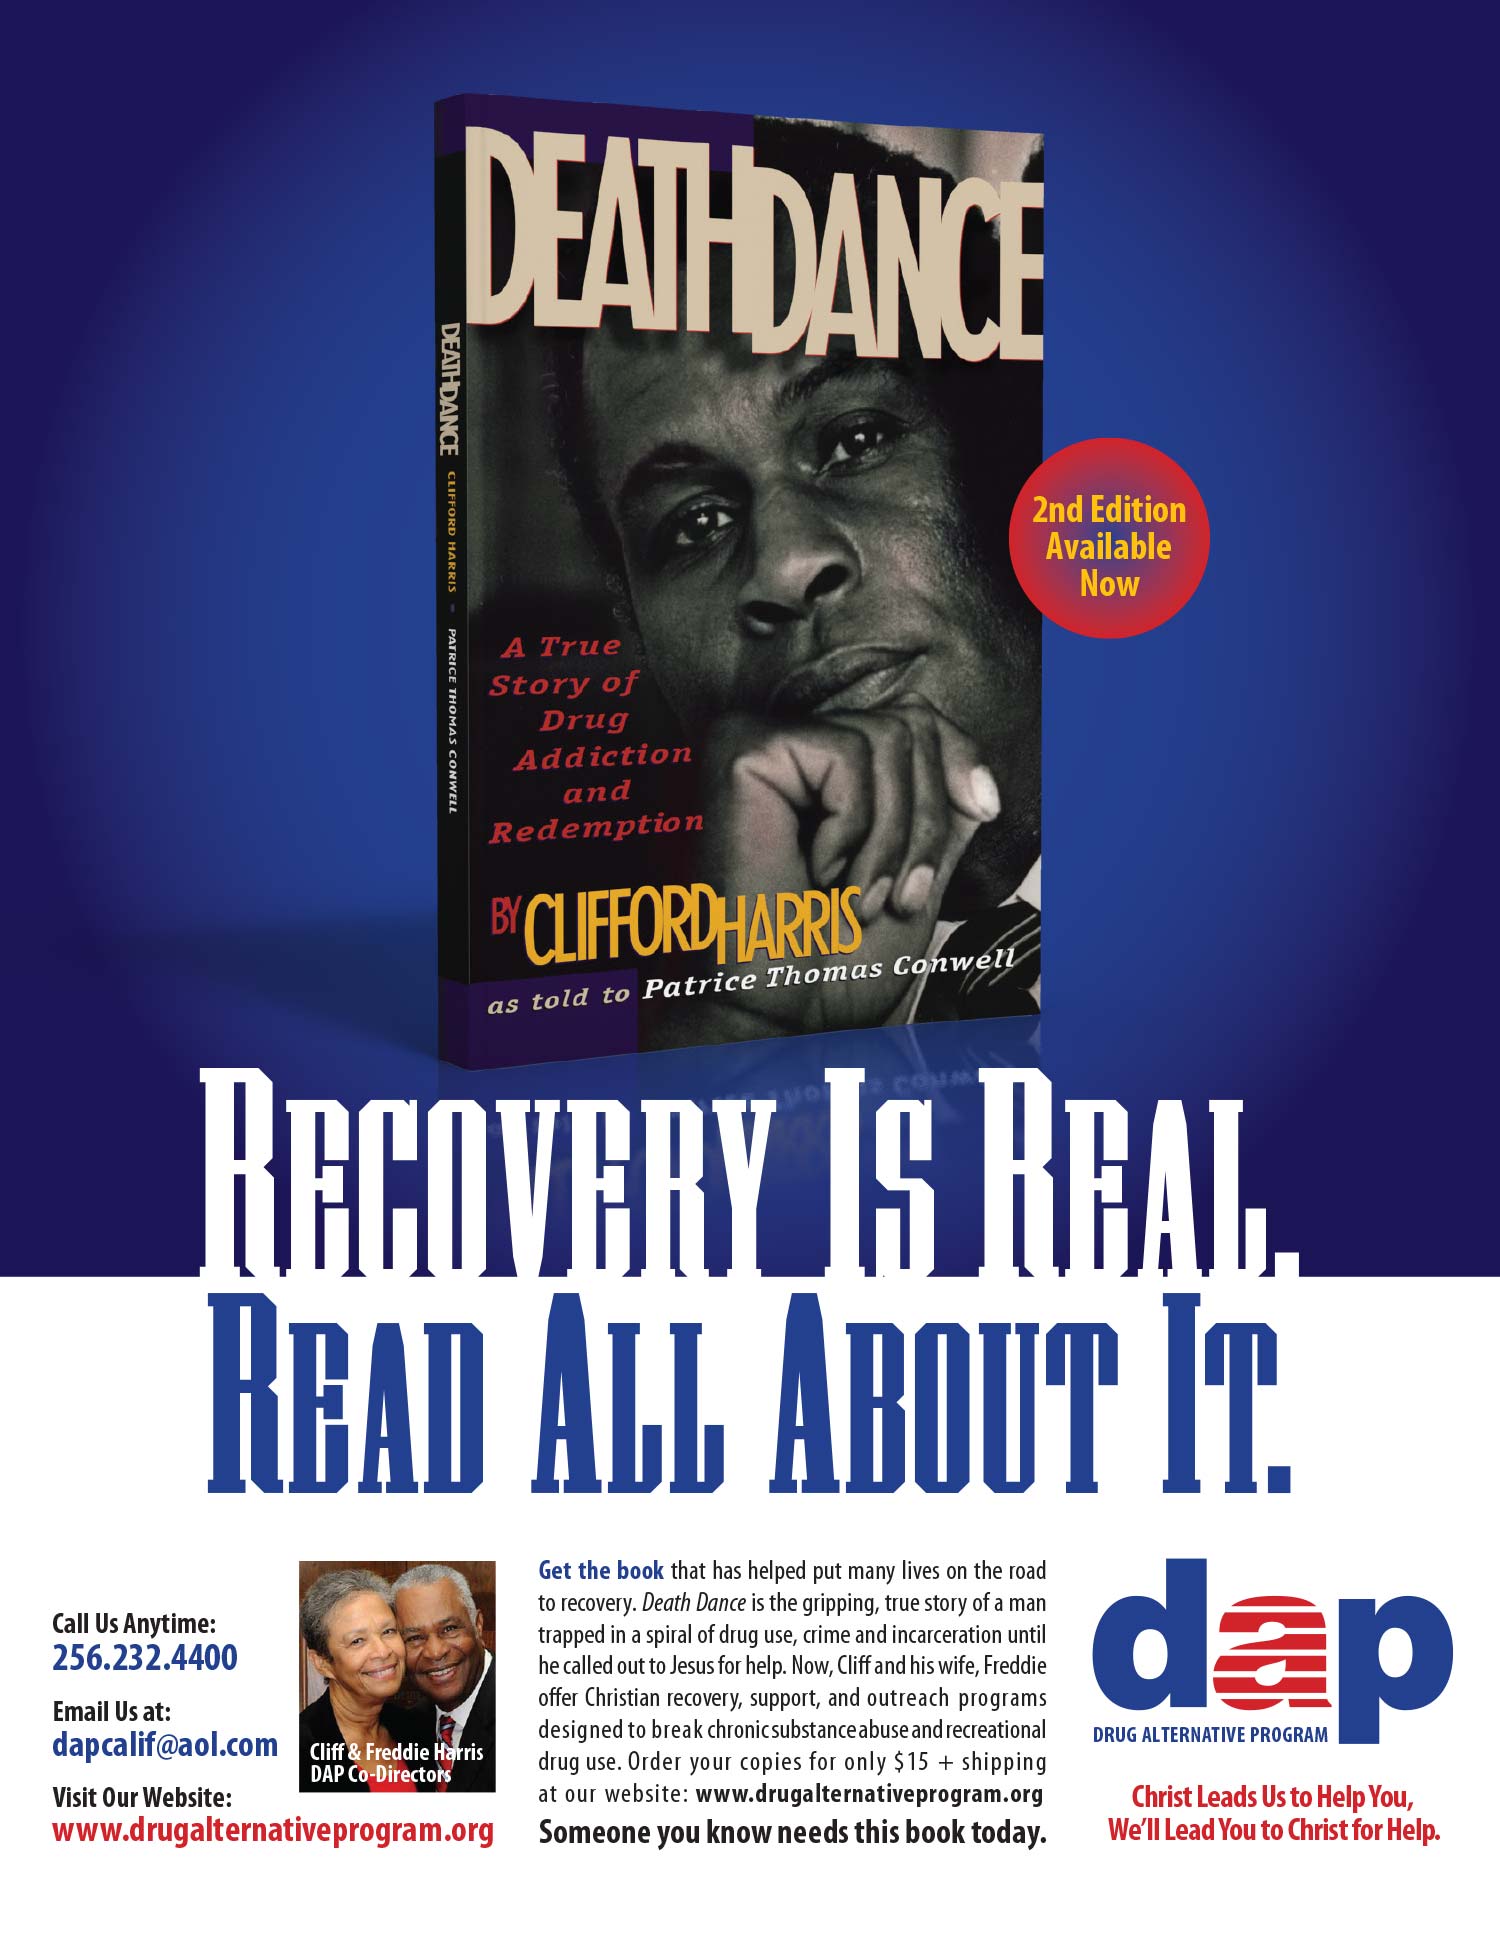 Drug Alternative Program (DAP) Advertisement